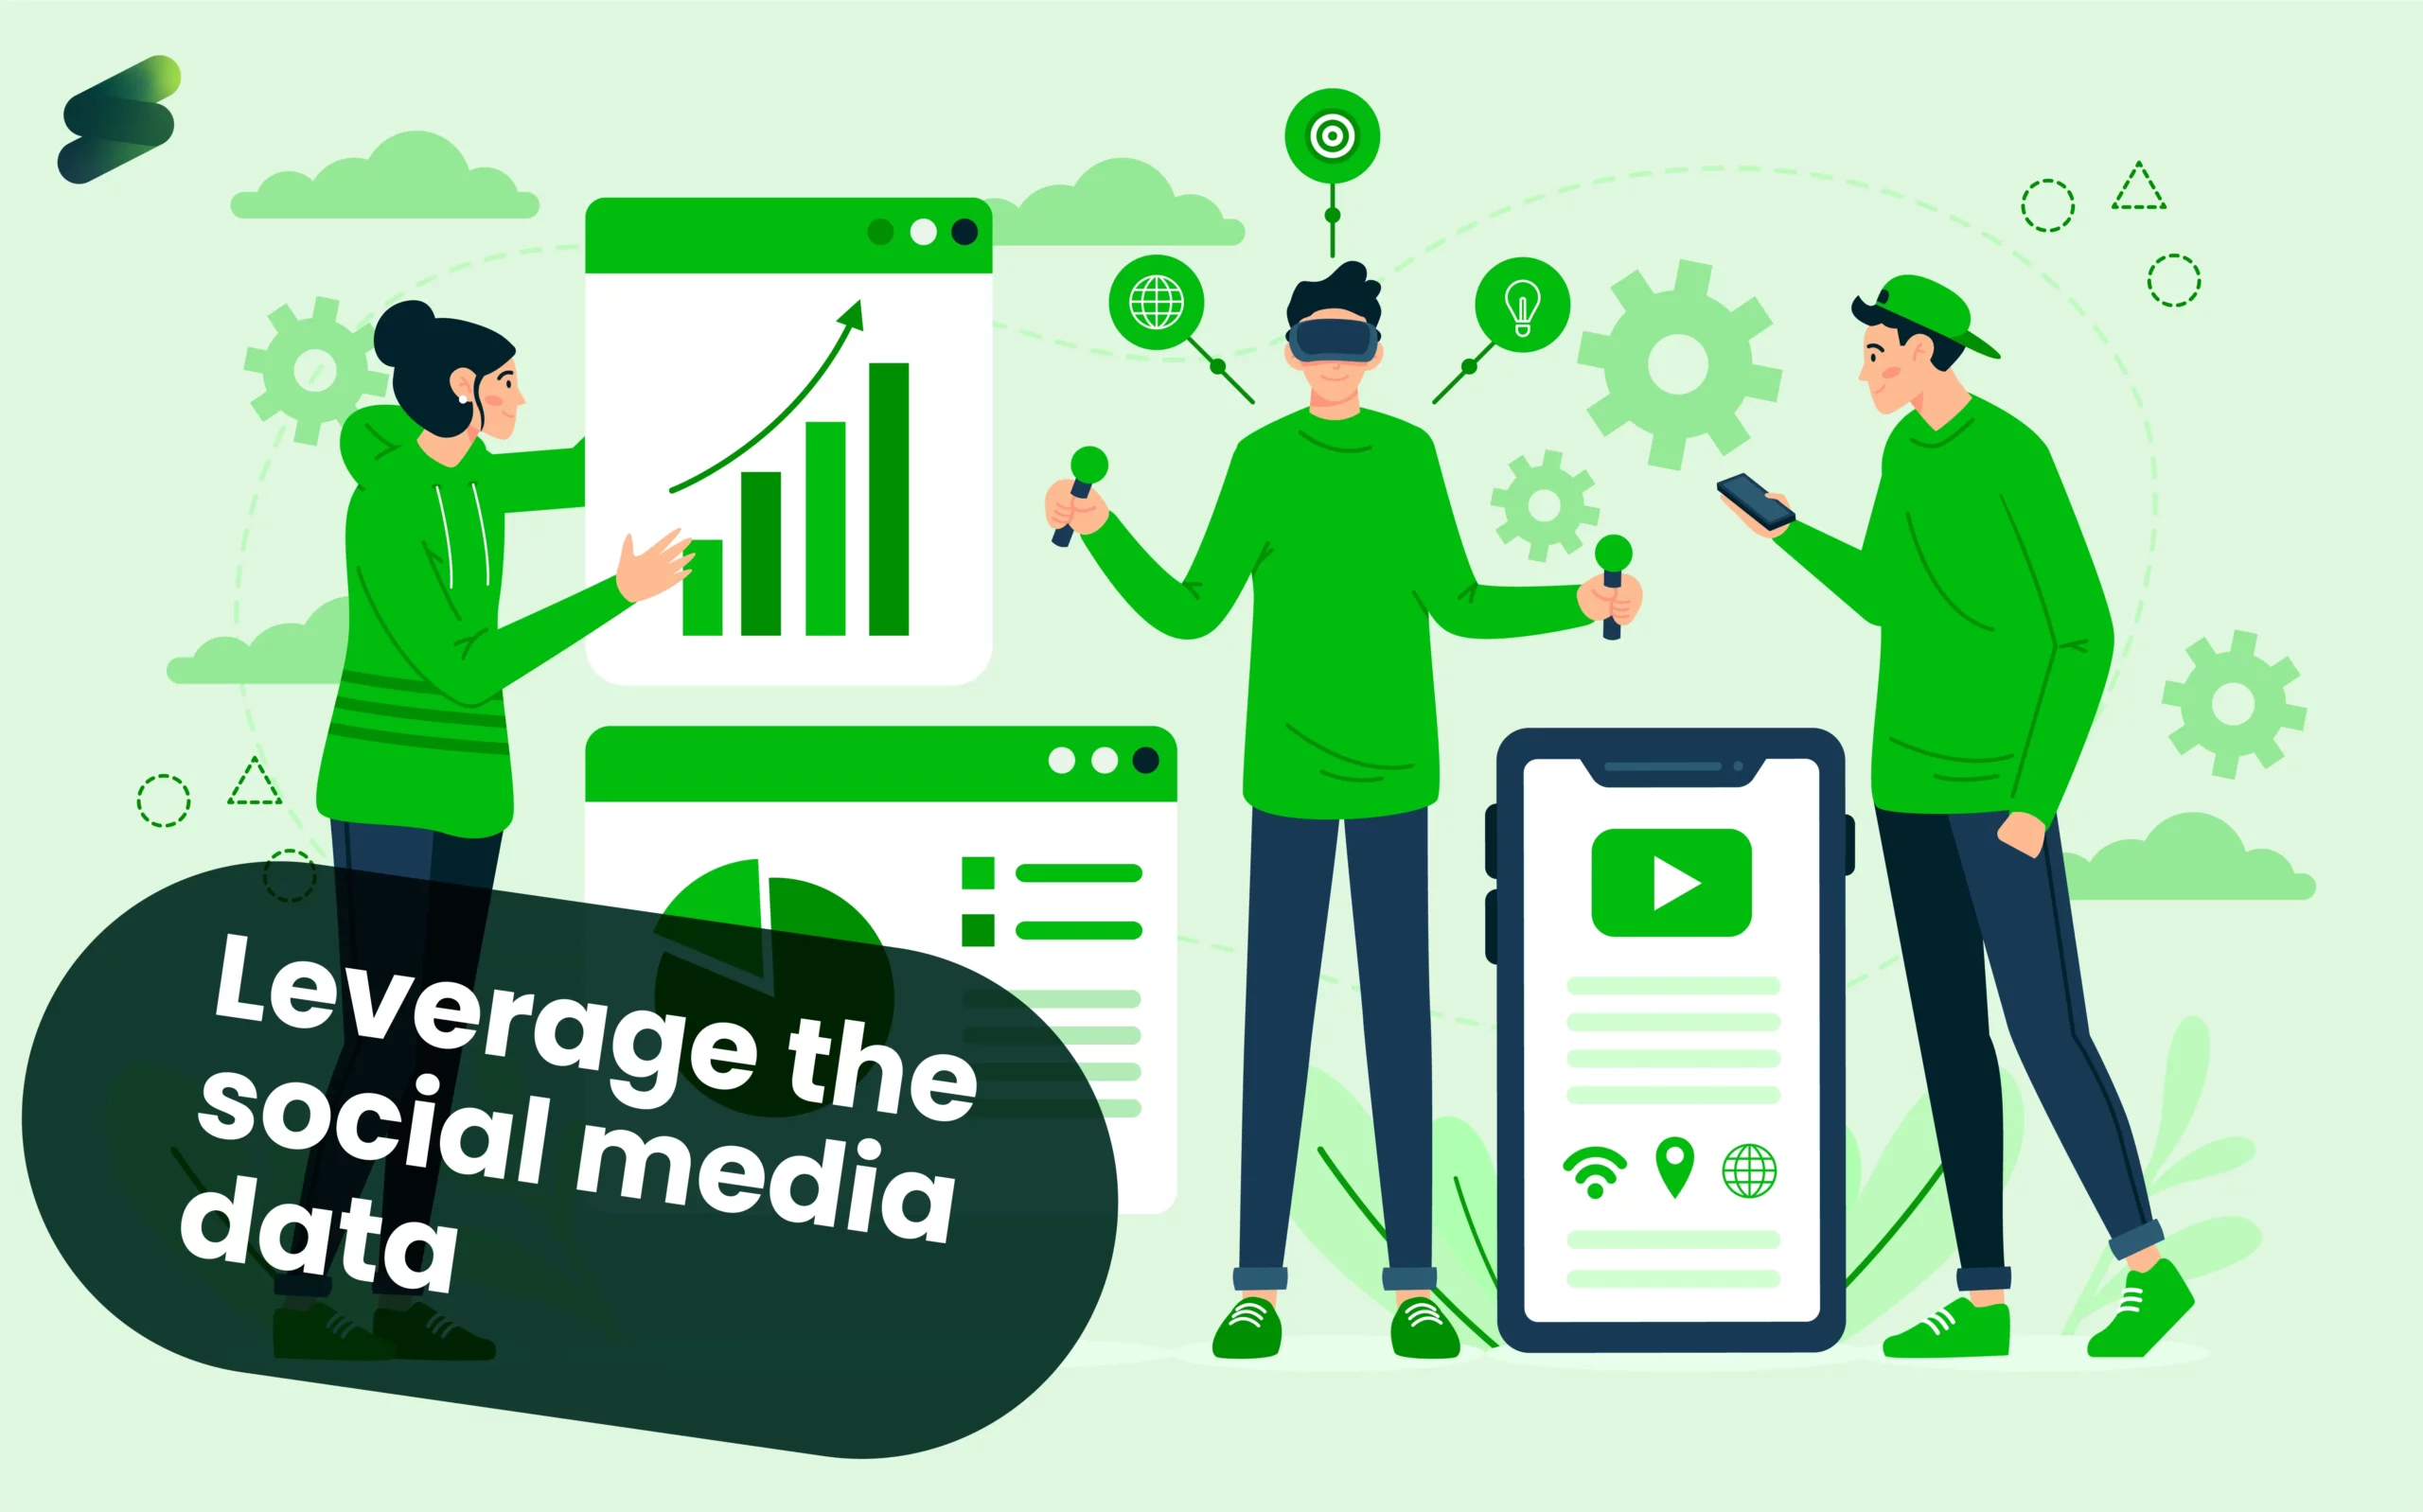 Leverage the social media data